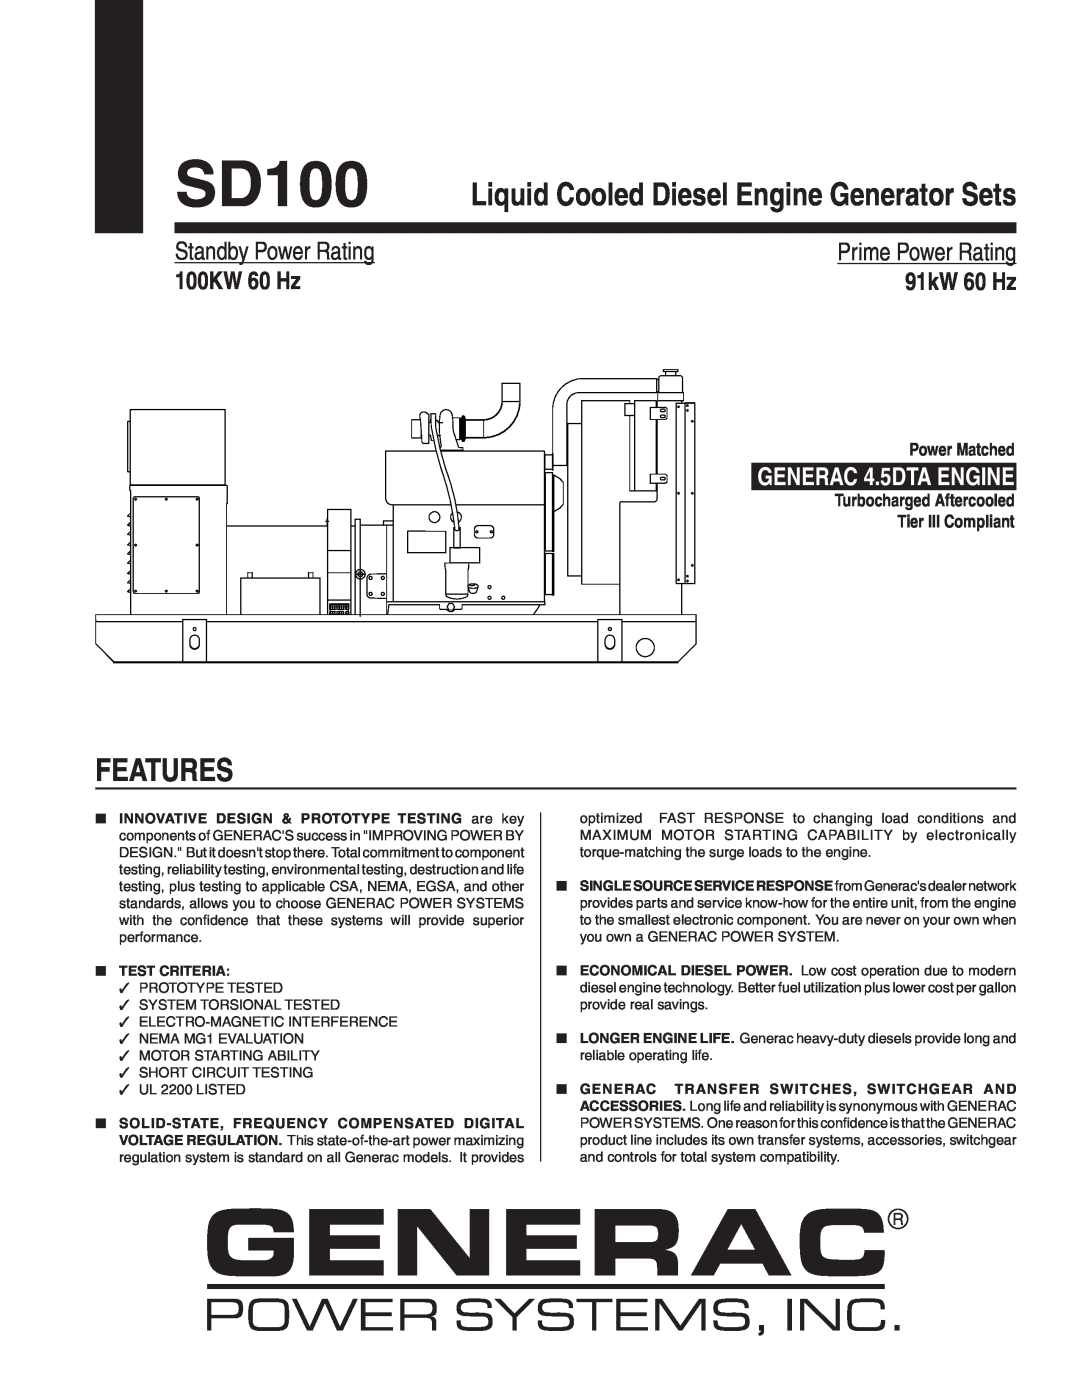 Generac SD100 manual Features, Liquid Cooled Diesel Engine Generator Sets, 100KW 60 Hz, 91kW 60 Hz, Power Matched 